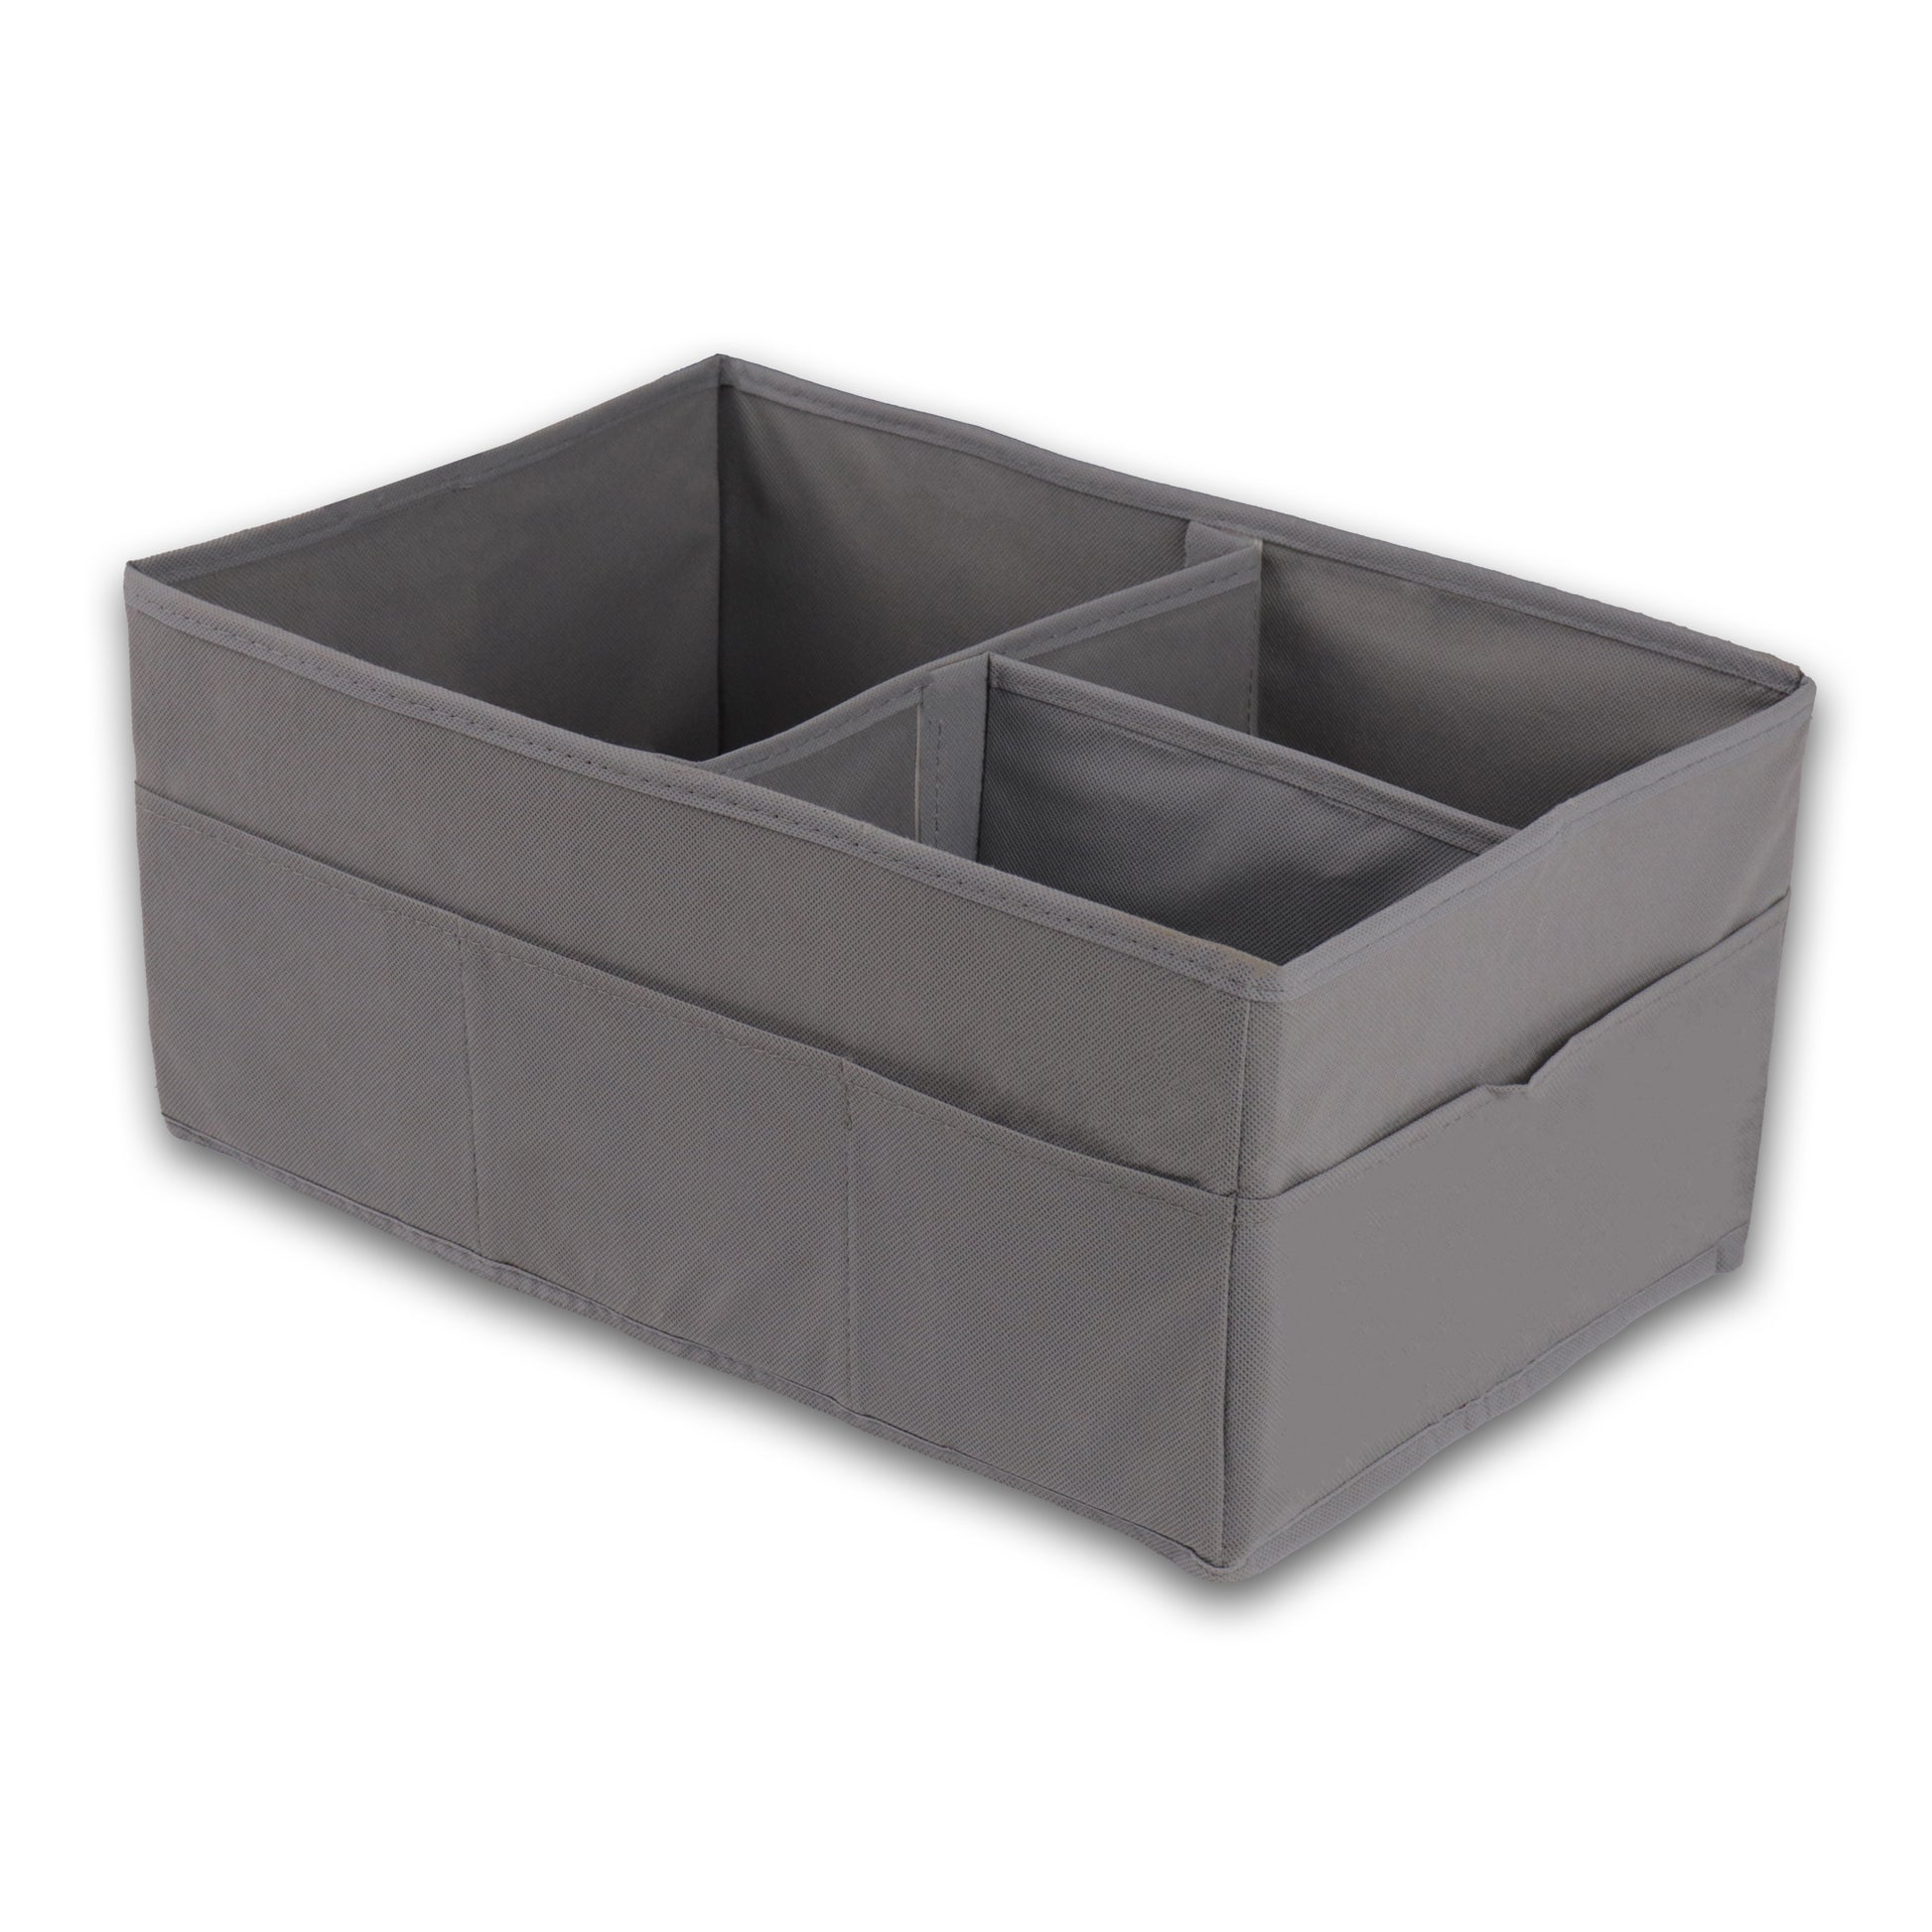 Multipurpose Storage Box With Compartments - Qoolish